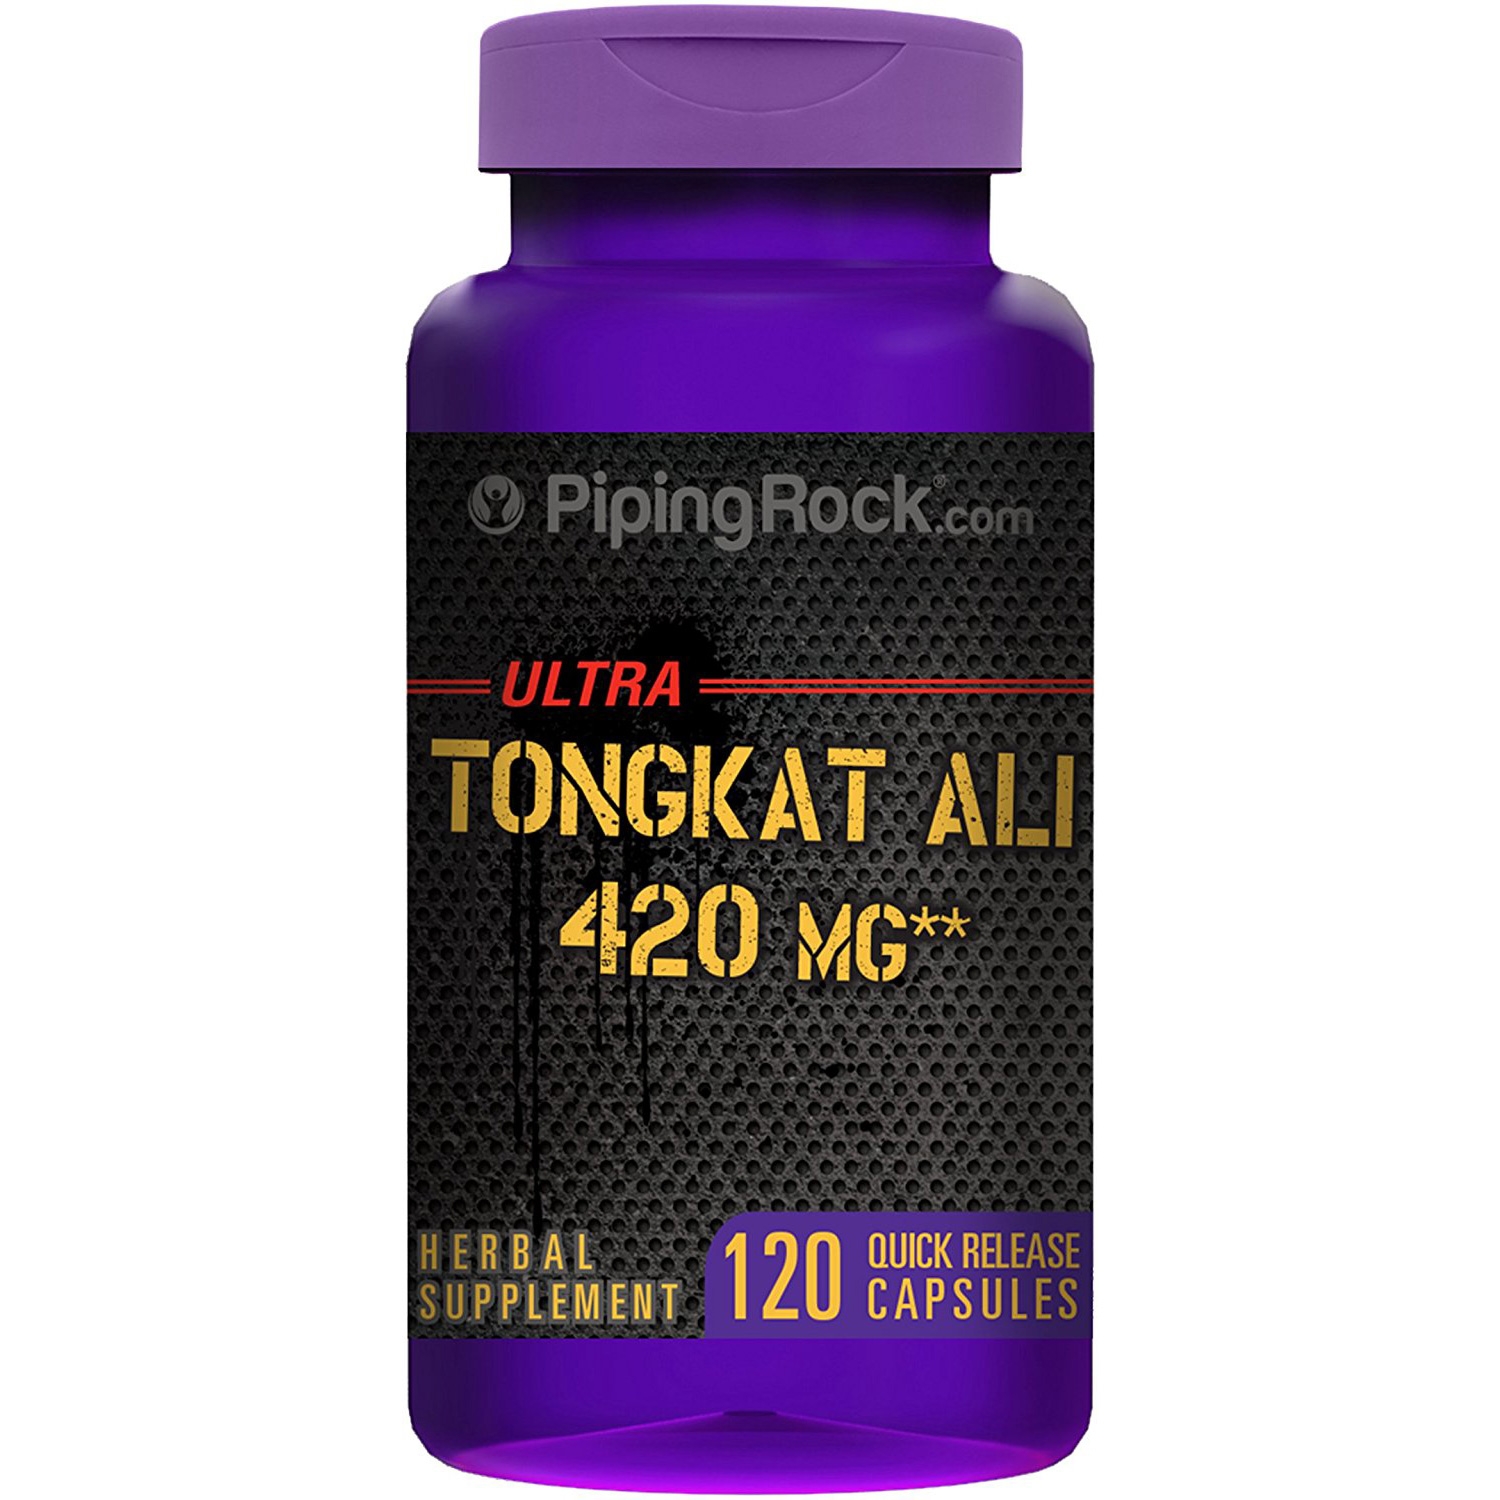  Pipingrock Ultra Tongkat Ali 420mg 